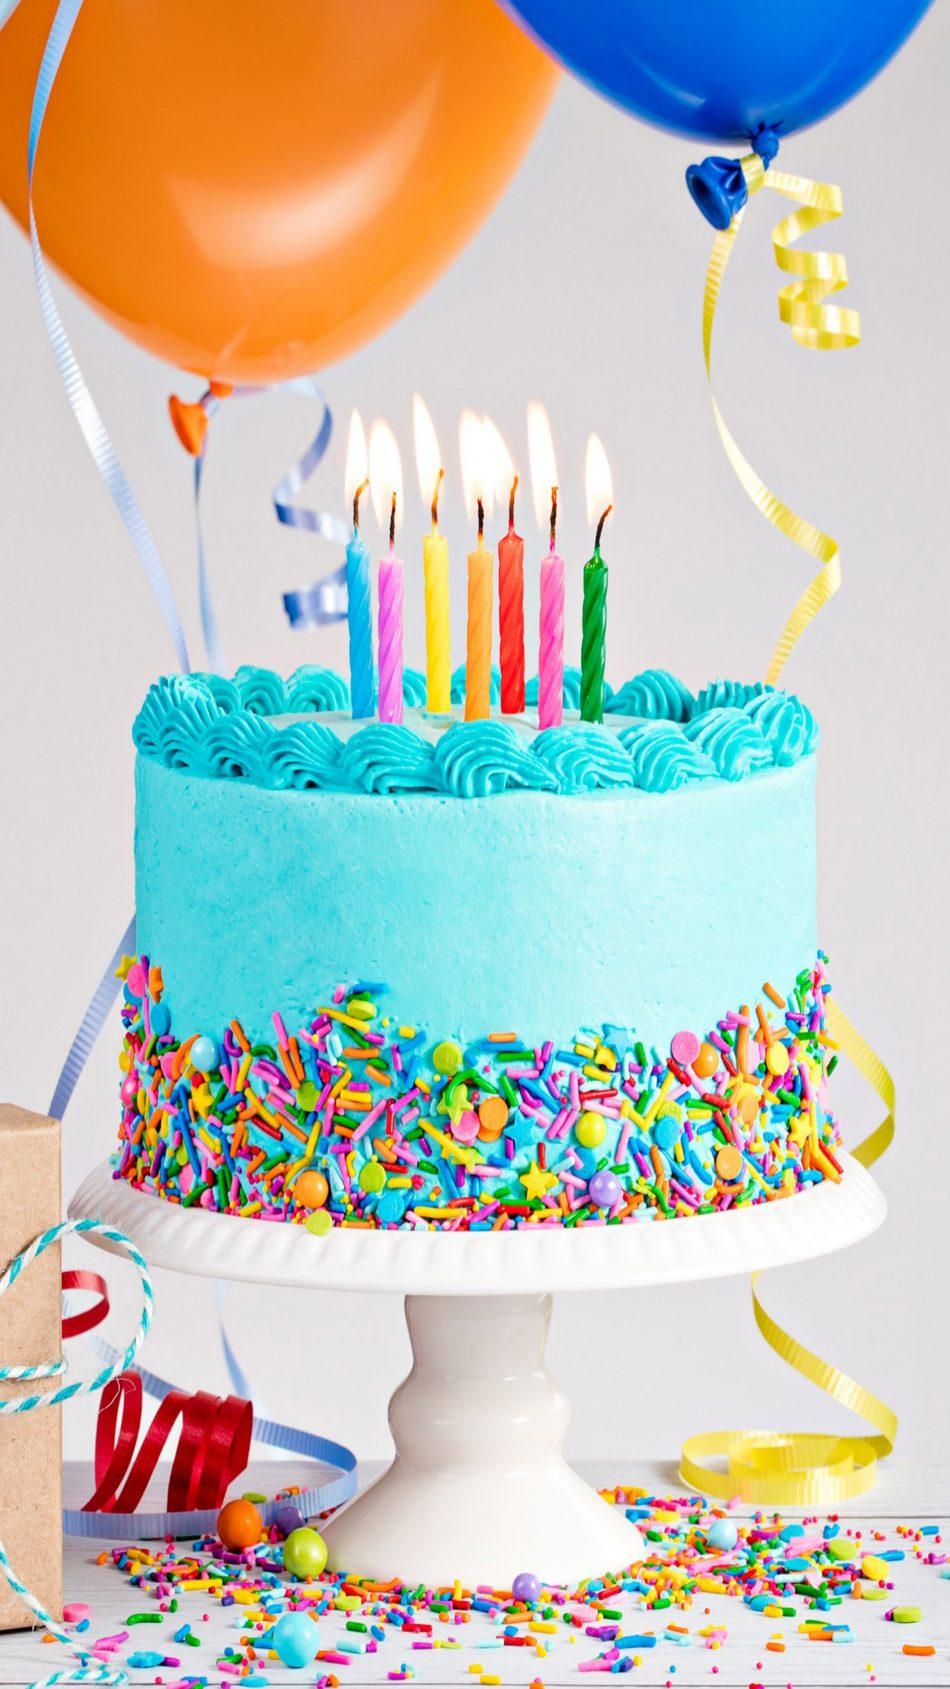 Birthday Cake Balloon Gift Free 4K Ultra HD Mobile Wallpaper